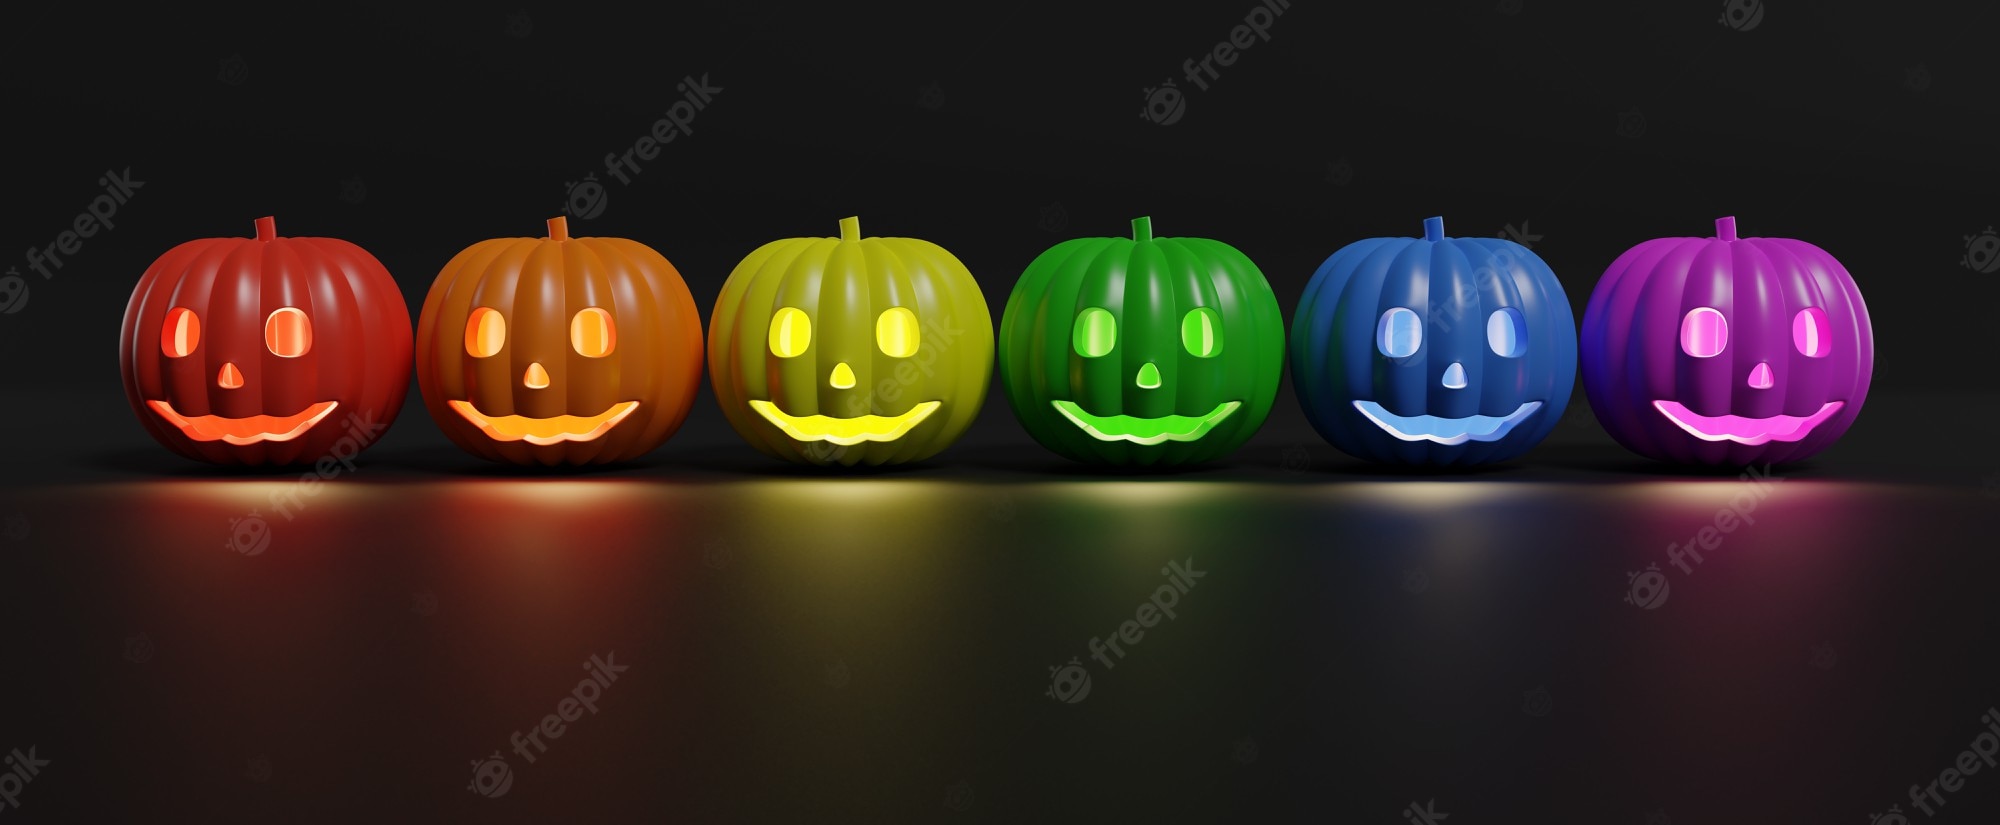 Halloween flag Image. Free Vectors, & PSD